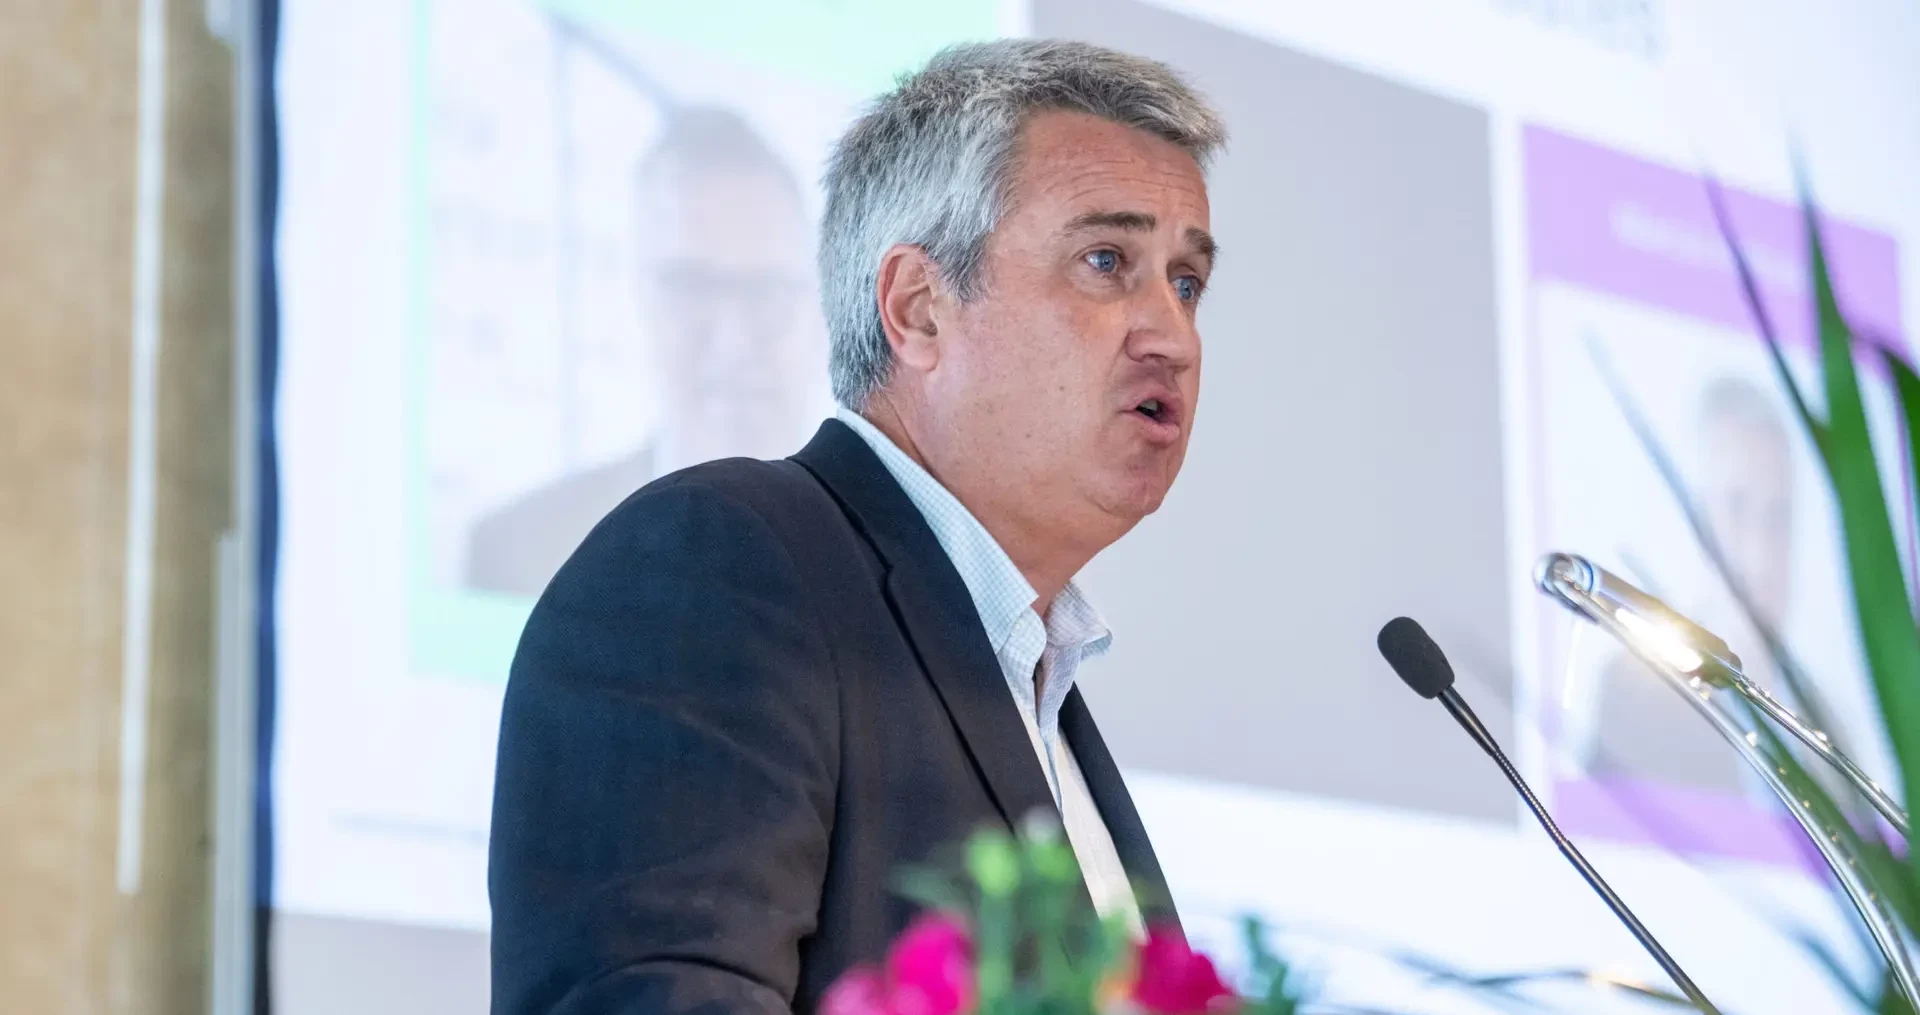 Hofmann succeeds long-serving Fleuren as President of rebranded European Hockey Federation